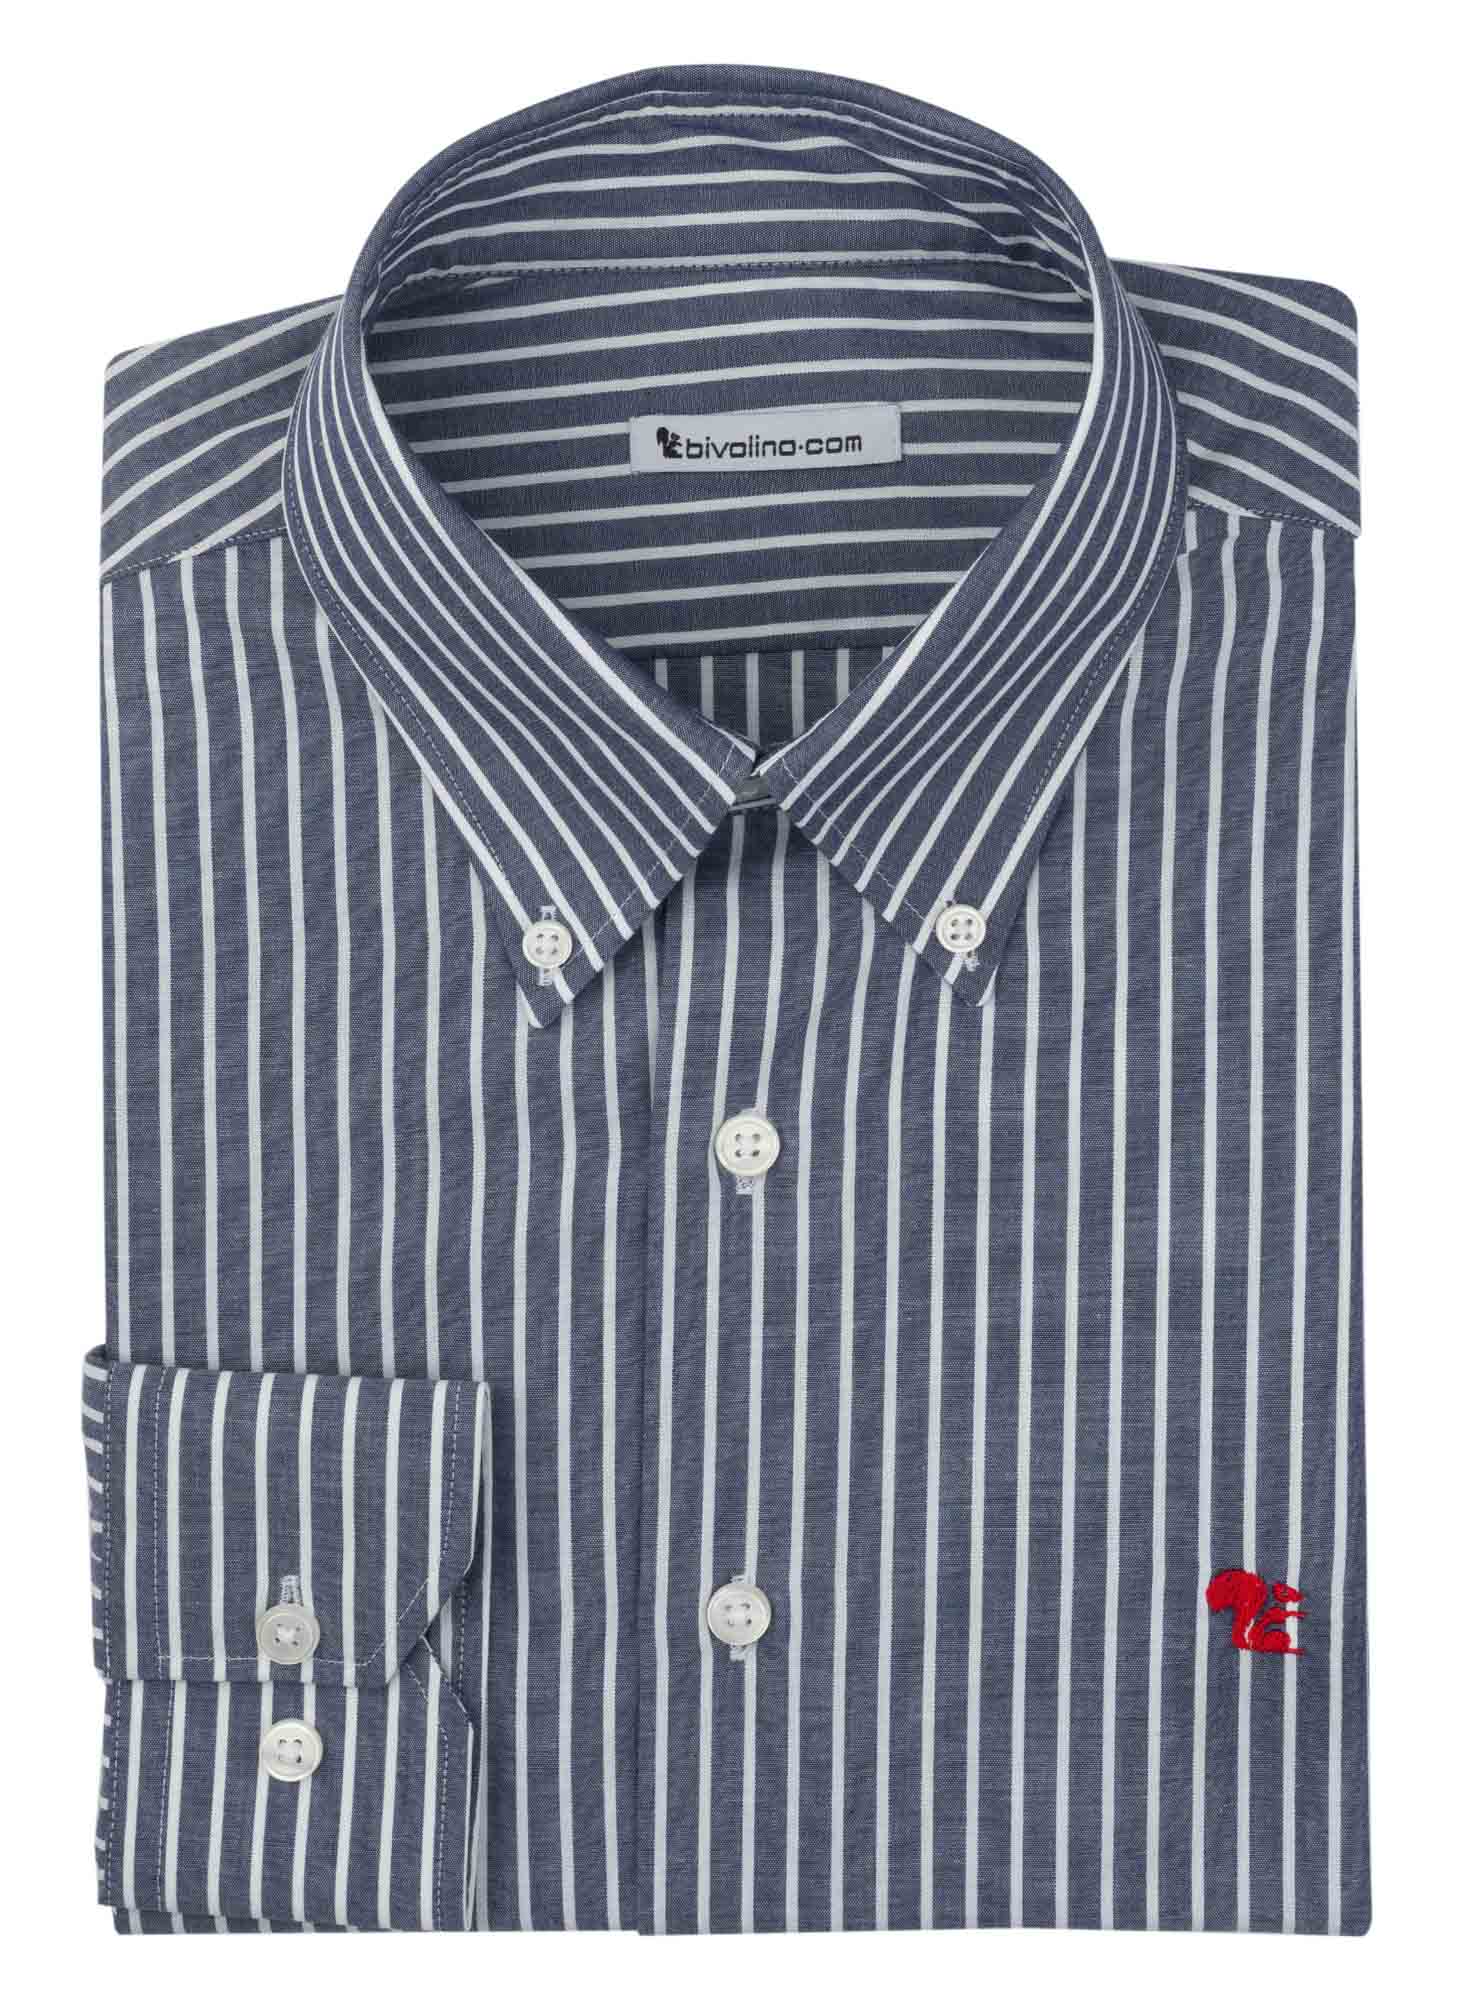 AMELIA - Camisa de popelina de algodón azul marino a rayas para hombre - XALI 1